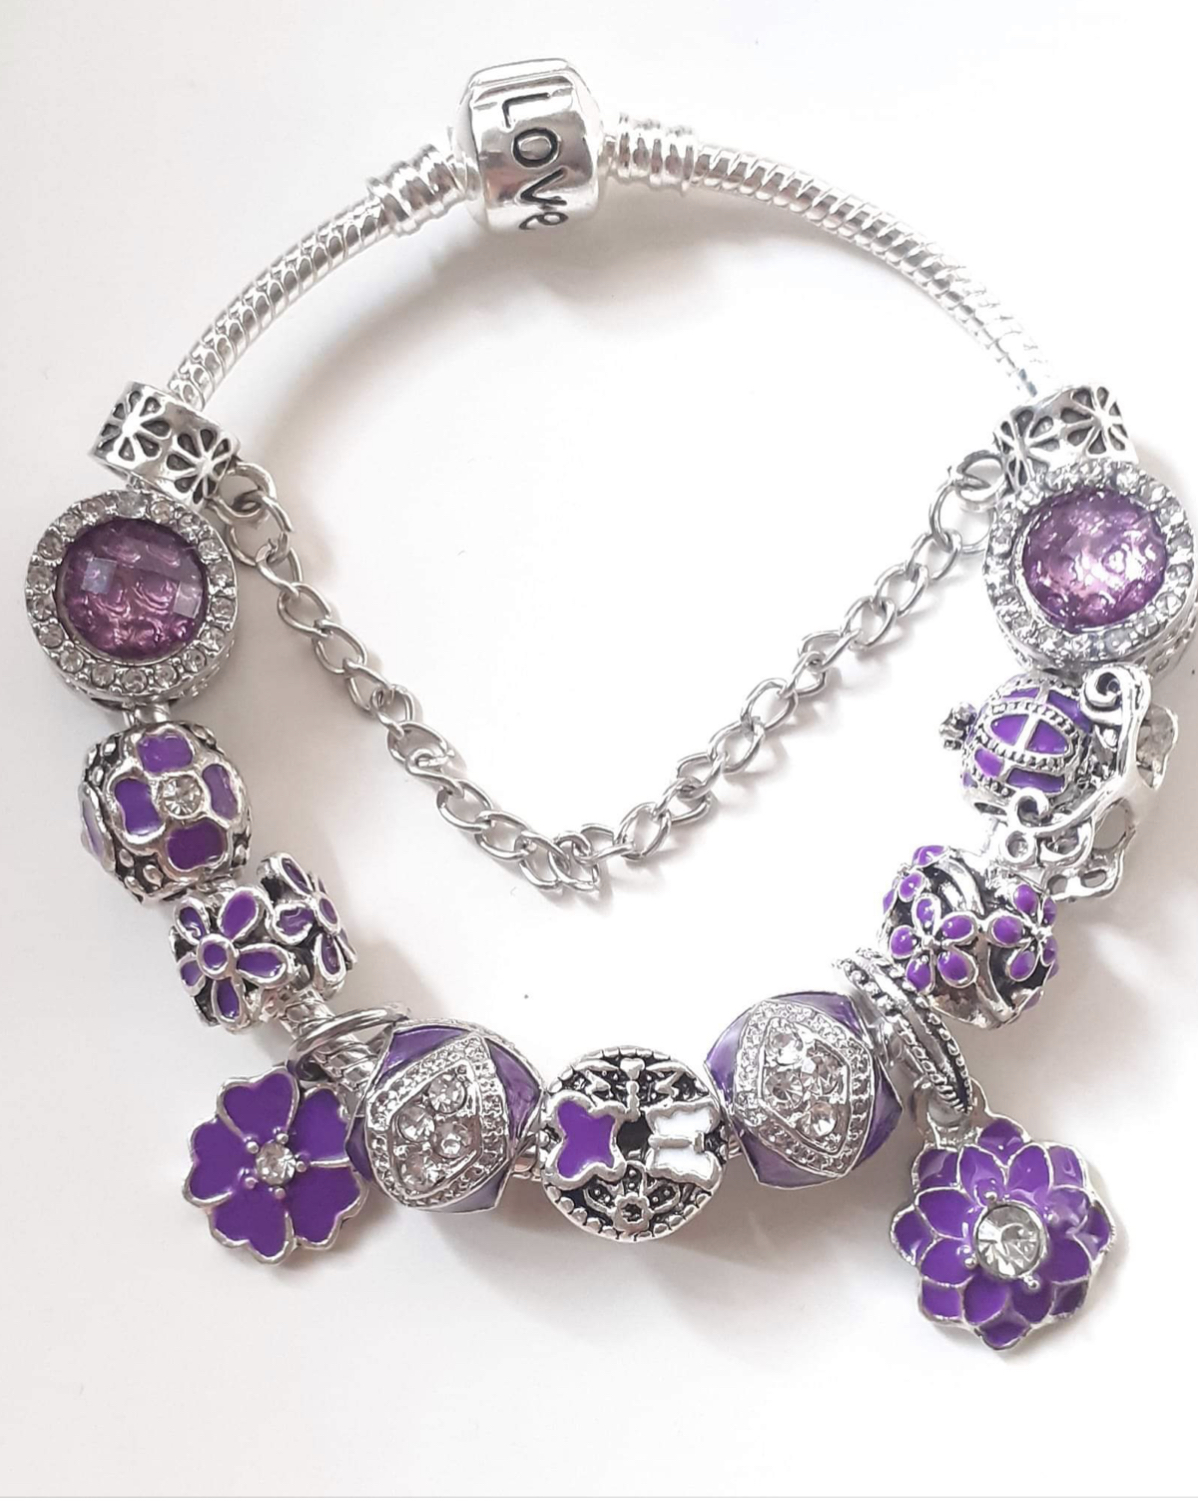 Charm Bracelet Like Pandora, European Pandora , European Charm Bracelet,flowers,carriage, Pendant With Zircons, Gift For Women,gift, Purple